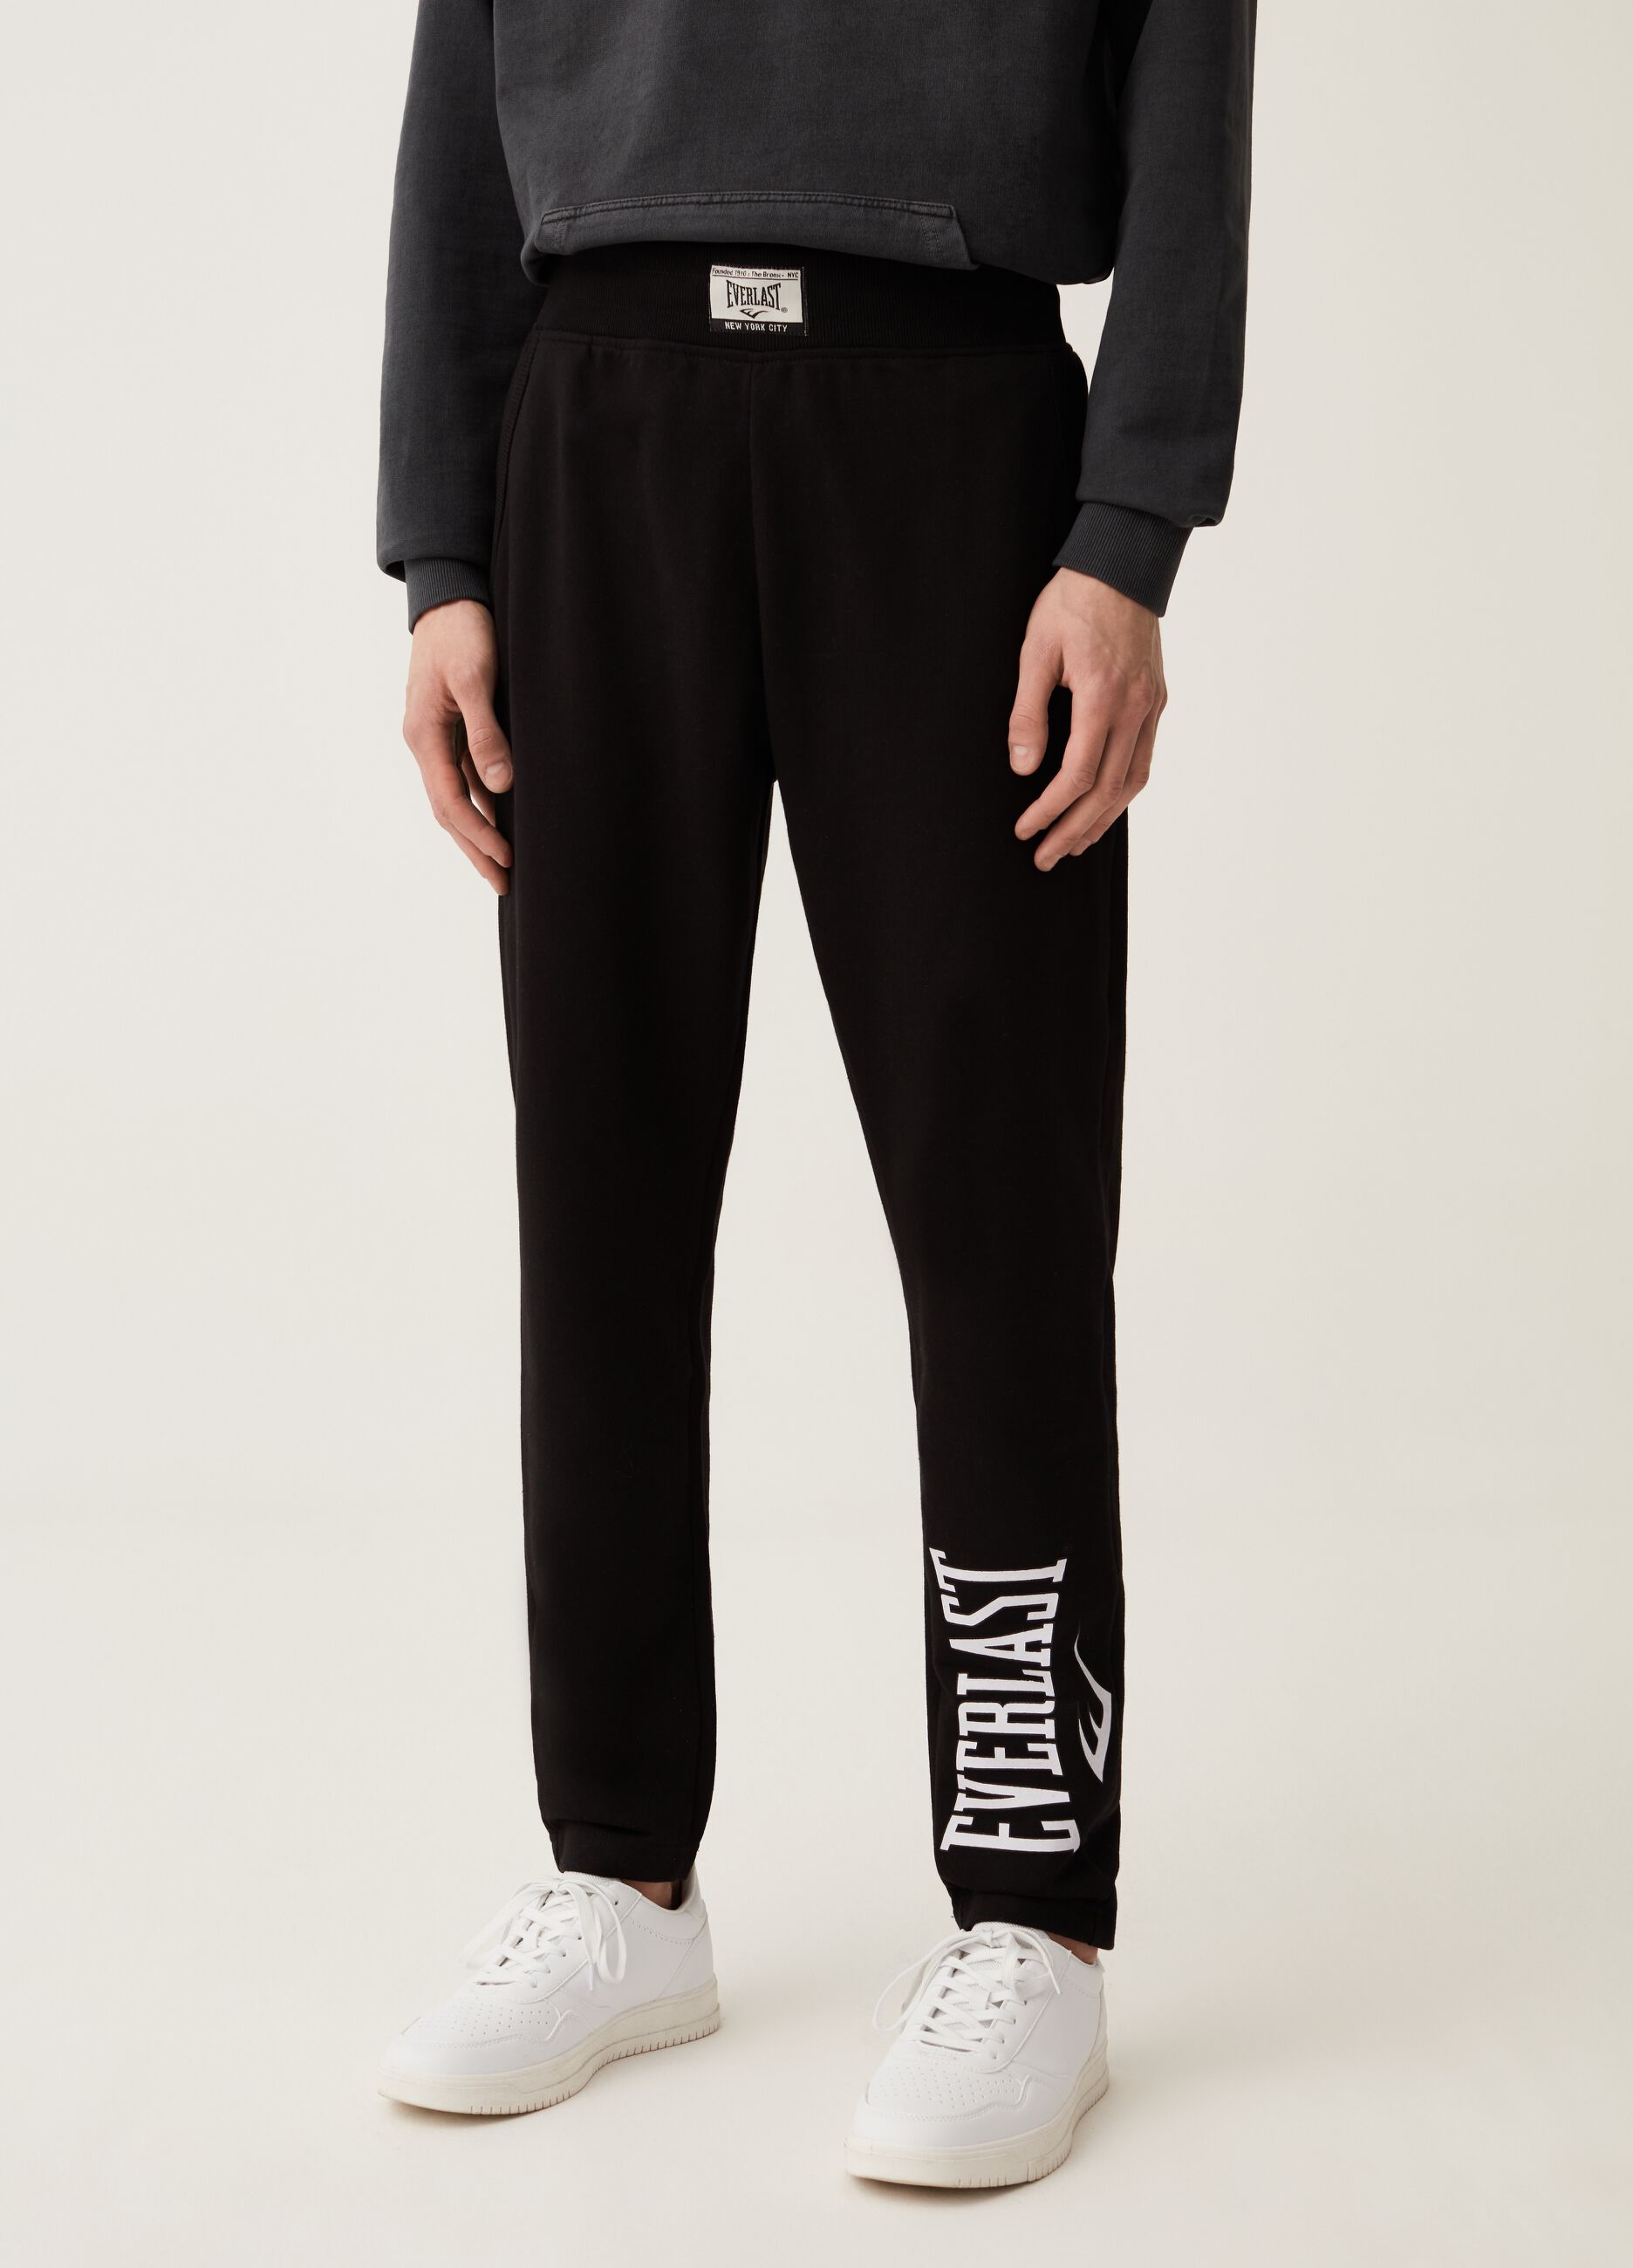 Everlast Joggers Pant Men's Black Activewear Pants Size XS Waist 30 In  Polyester | eBay